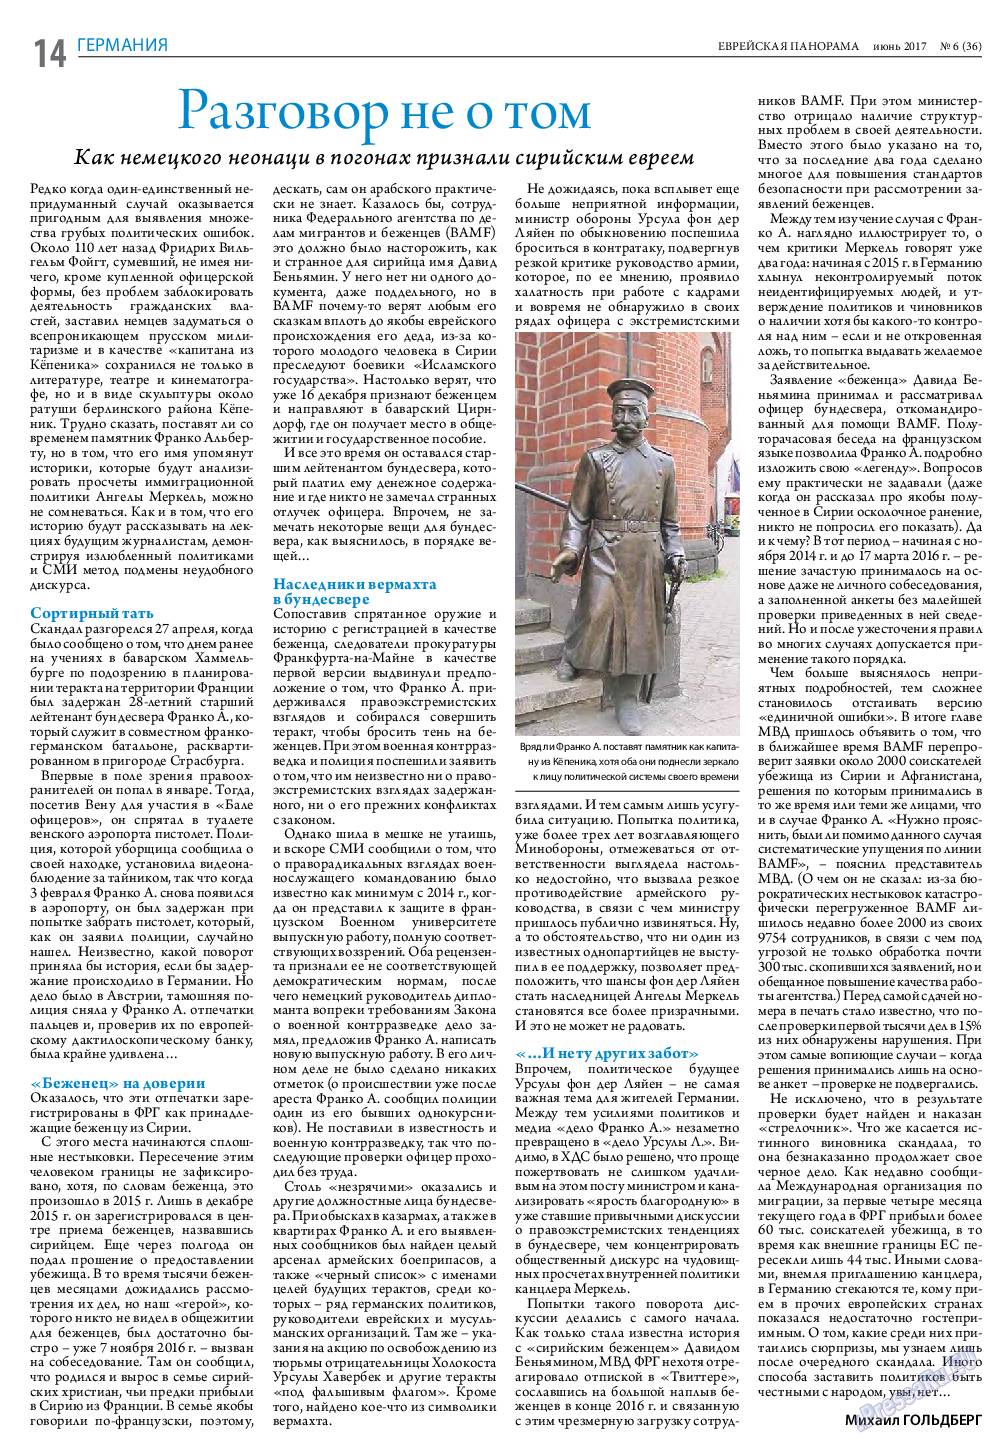 Еврейская панорама, газета. 2017 №6 стр.14